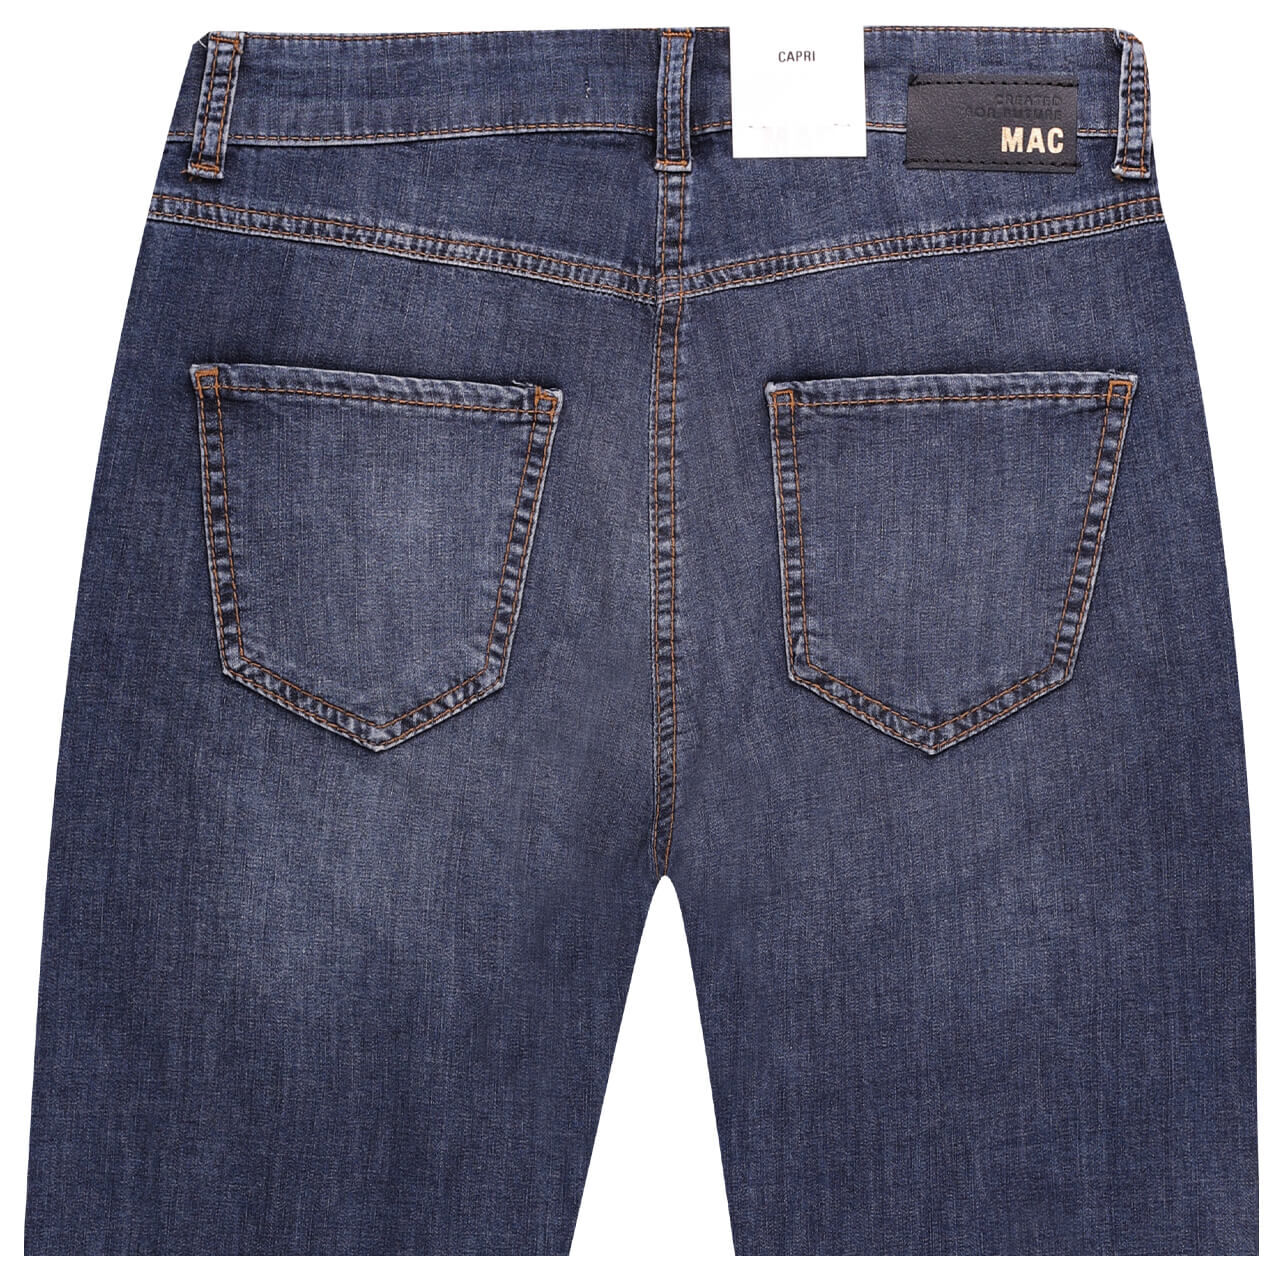 MAC Capri 3/4 Jeans night blue